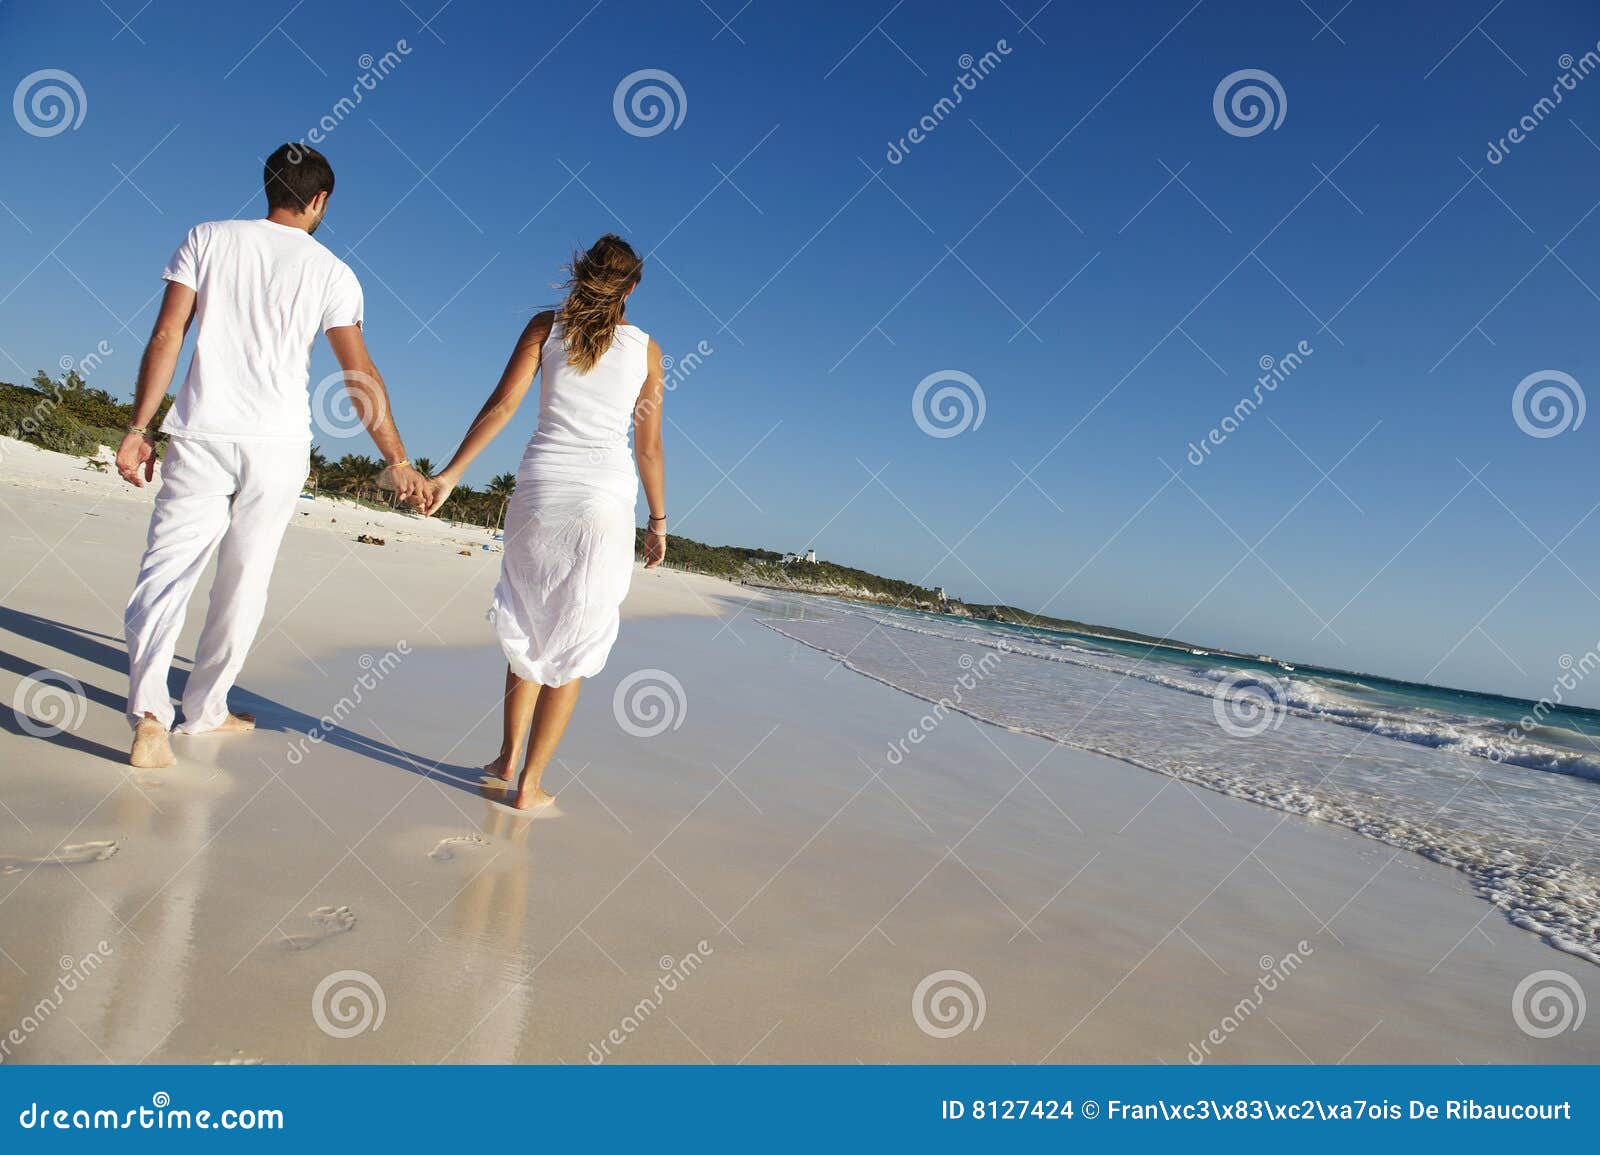 loving couple at beach